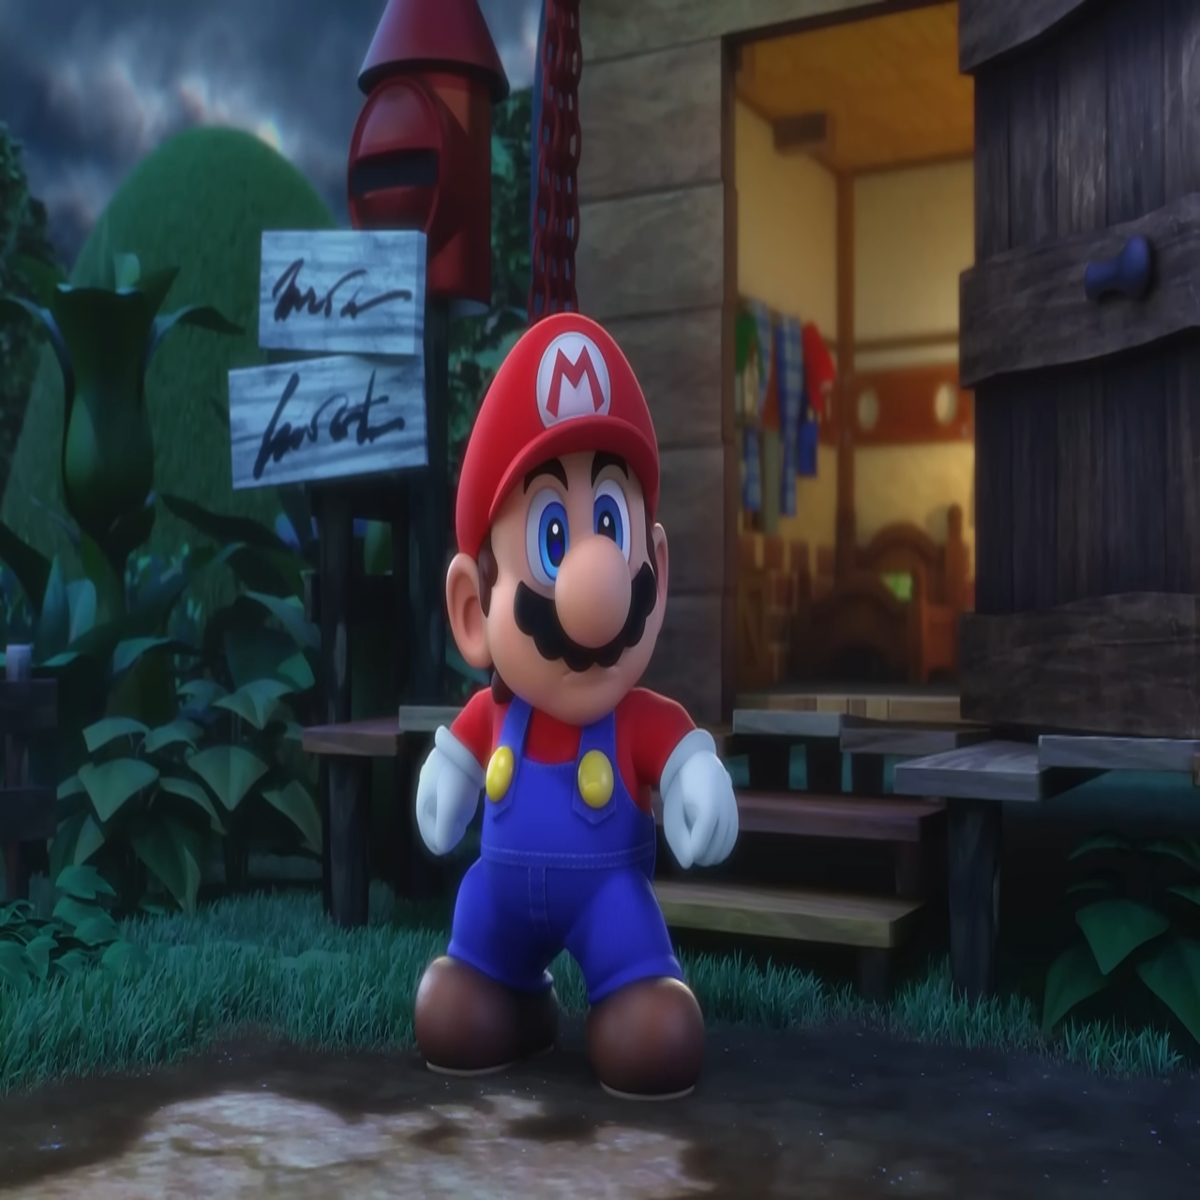 Get Excited, Nintendo Is Remaking 'Super Mario RPG